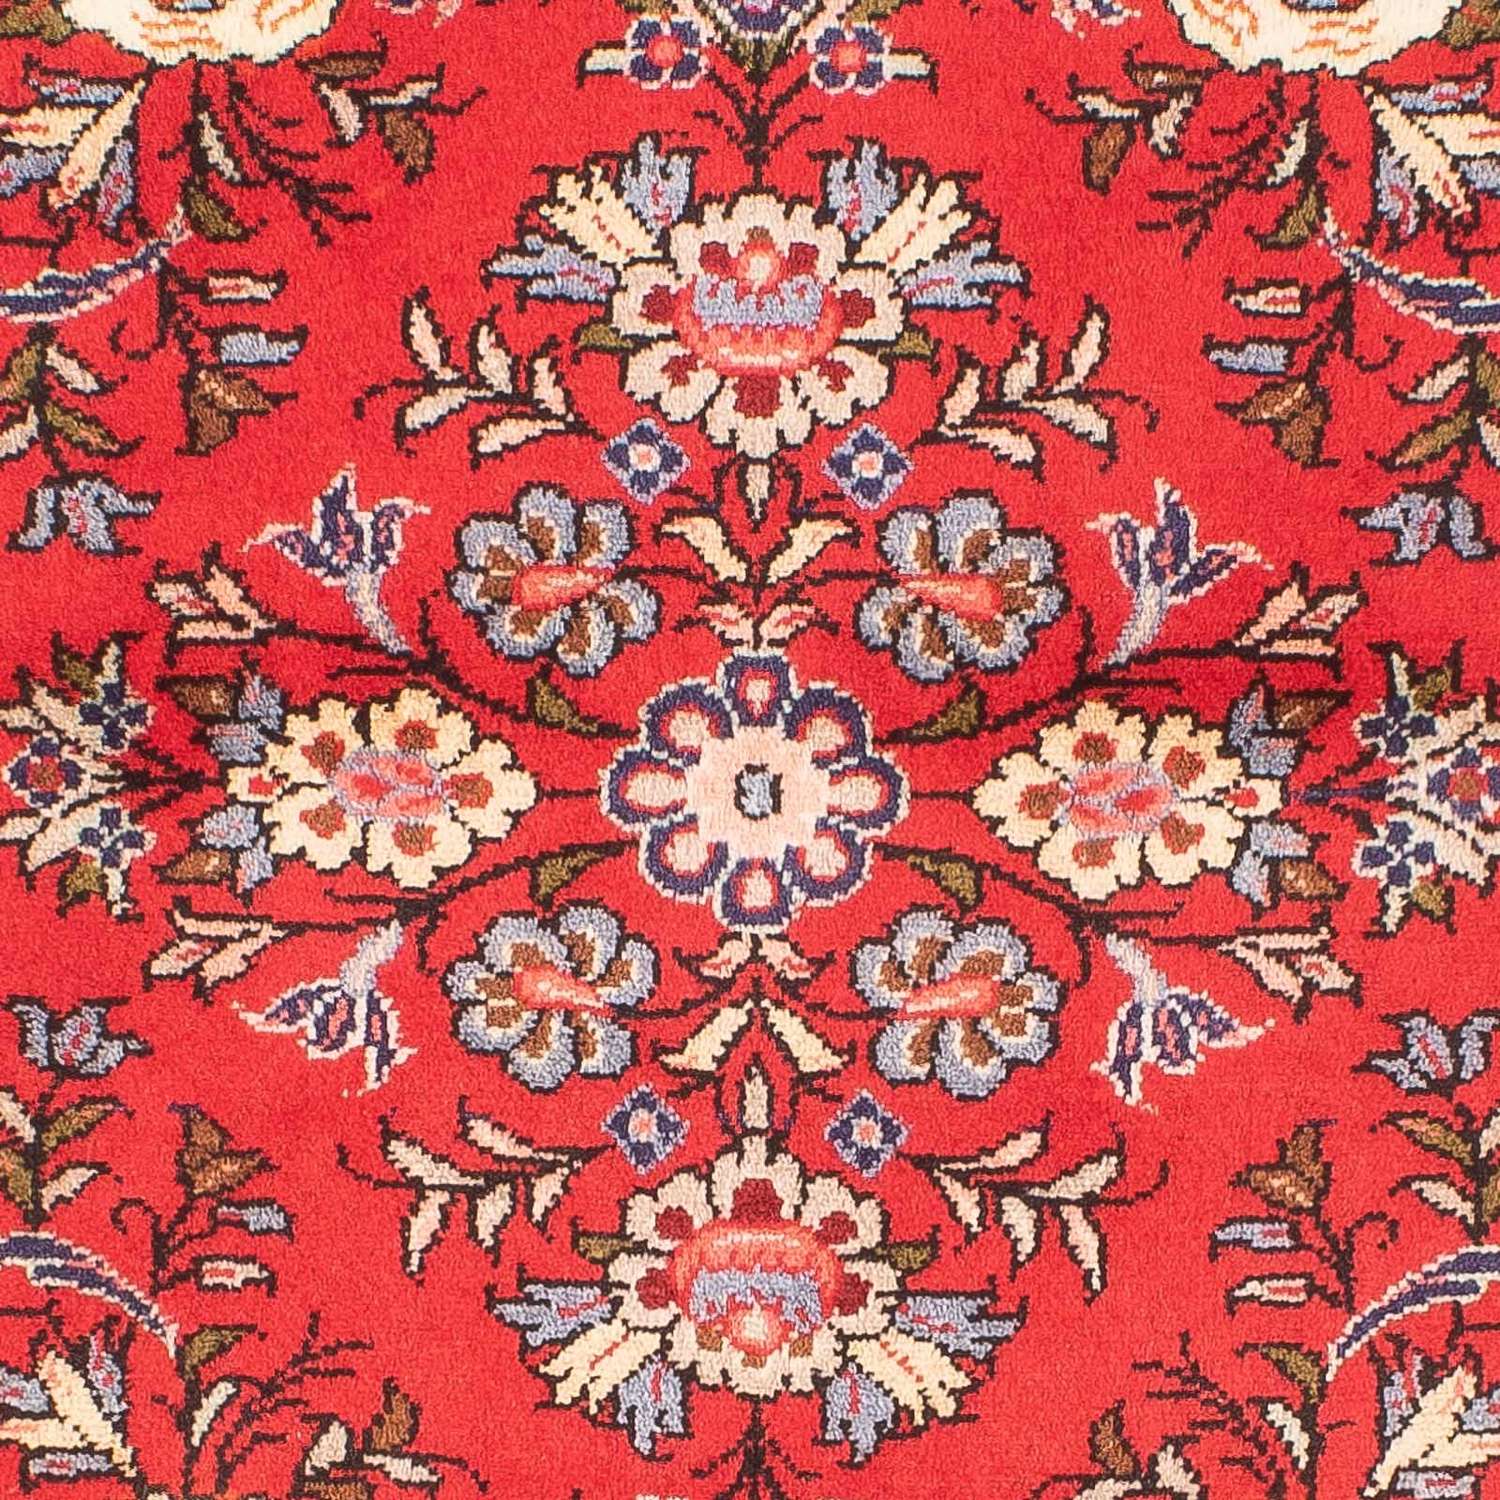 Perský koberec - Klasický - 111 x 76 cm - červená